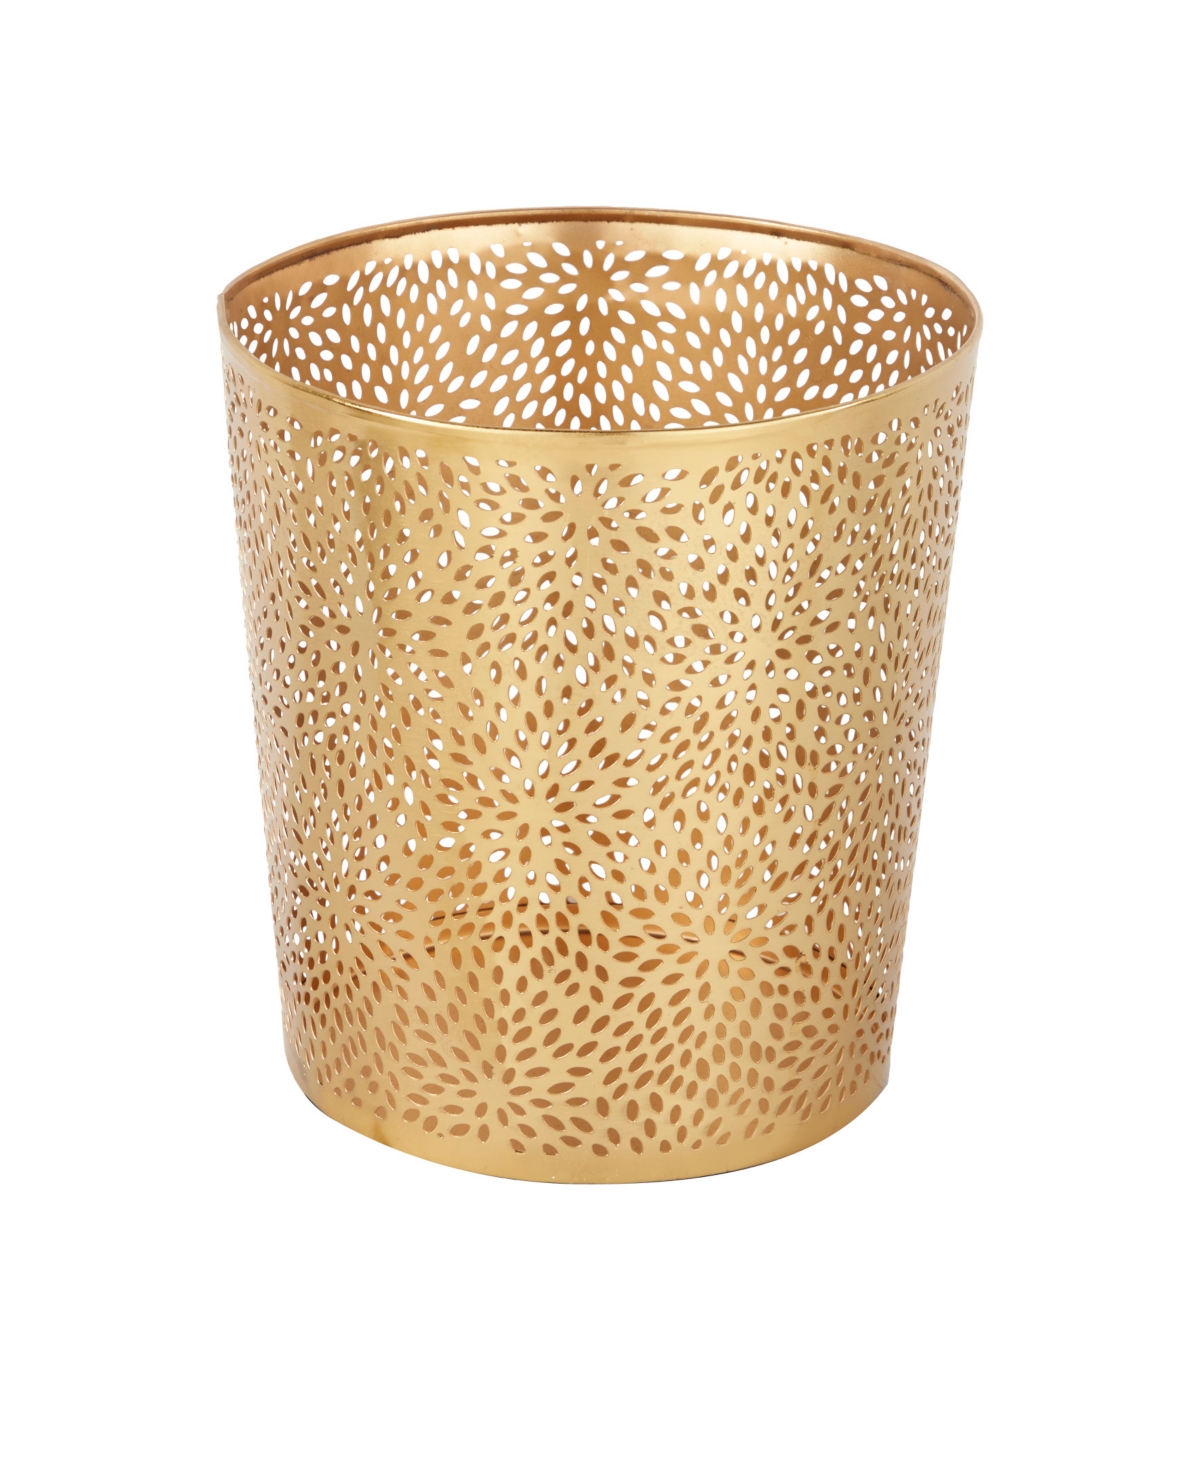 Small, Round, Glam Style Metallic Pierced Metal Waste Basket with Chrysanthemum Pattern - Gold-tone